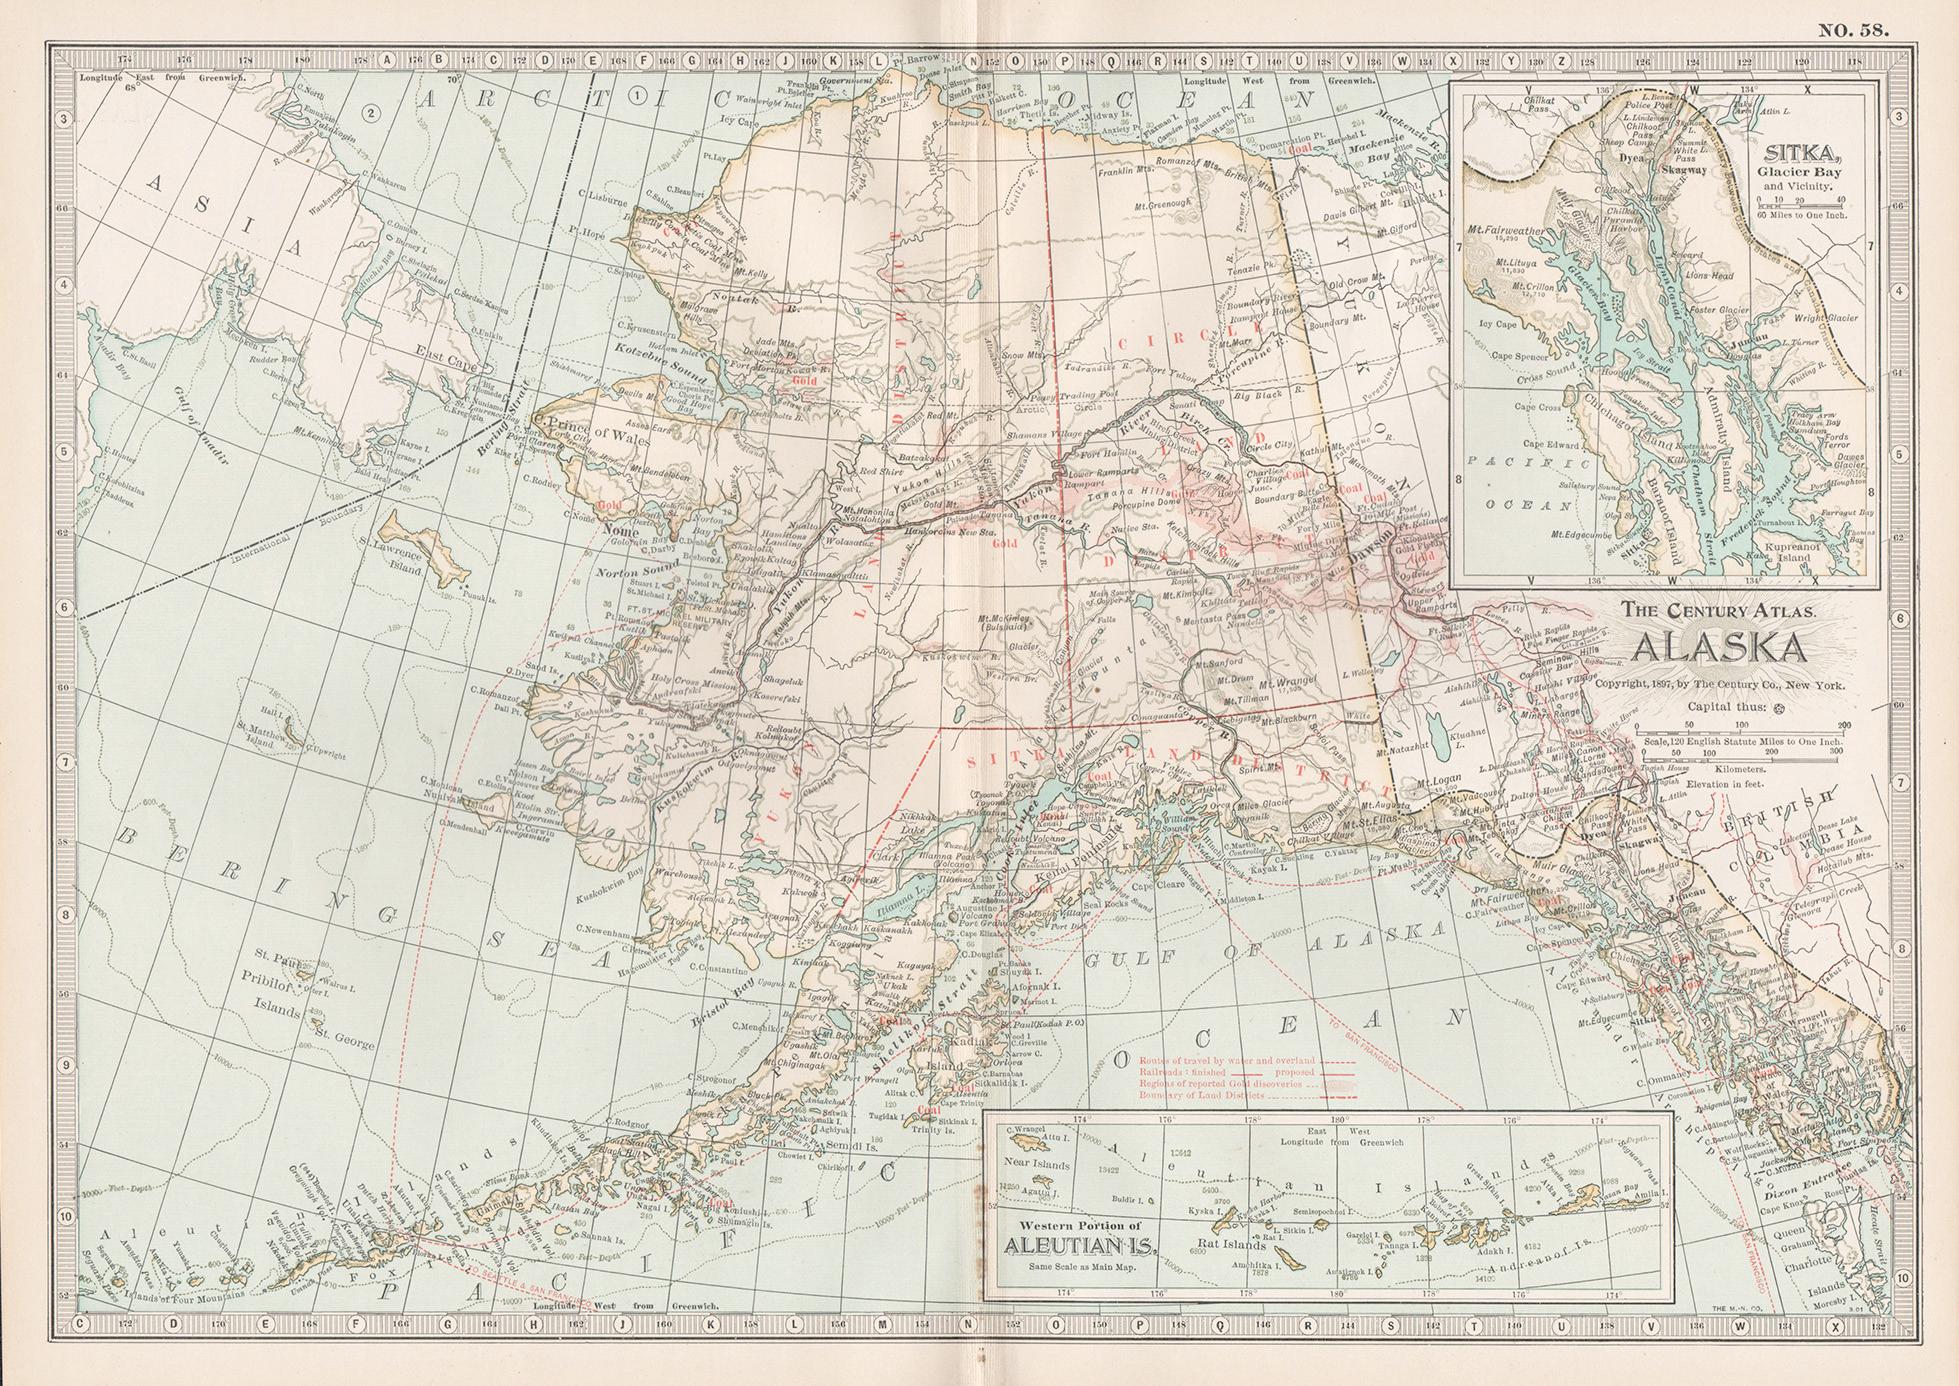 Alaska, United States of America, Century Atlas state antique vintage map